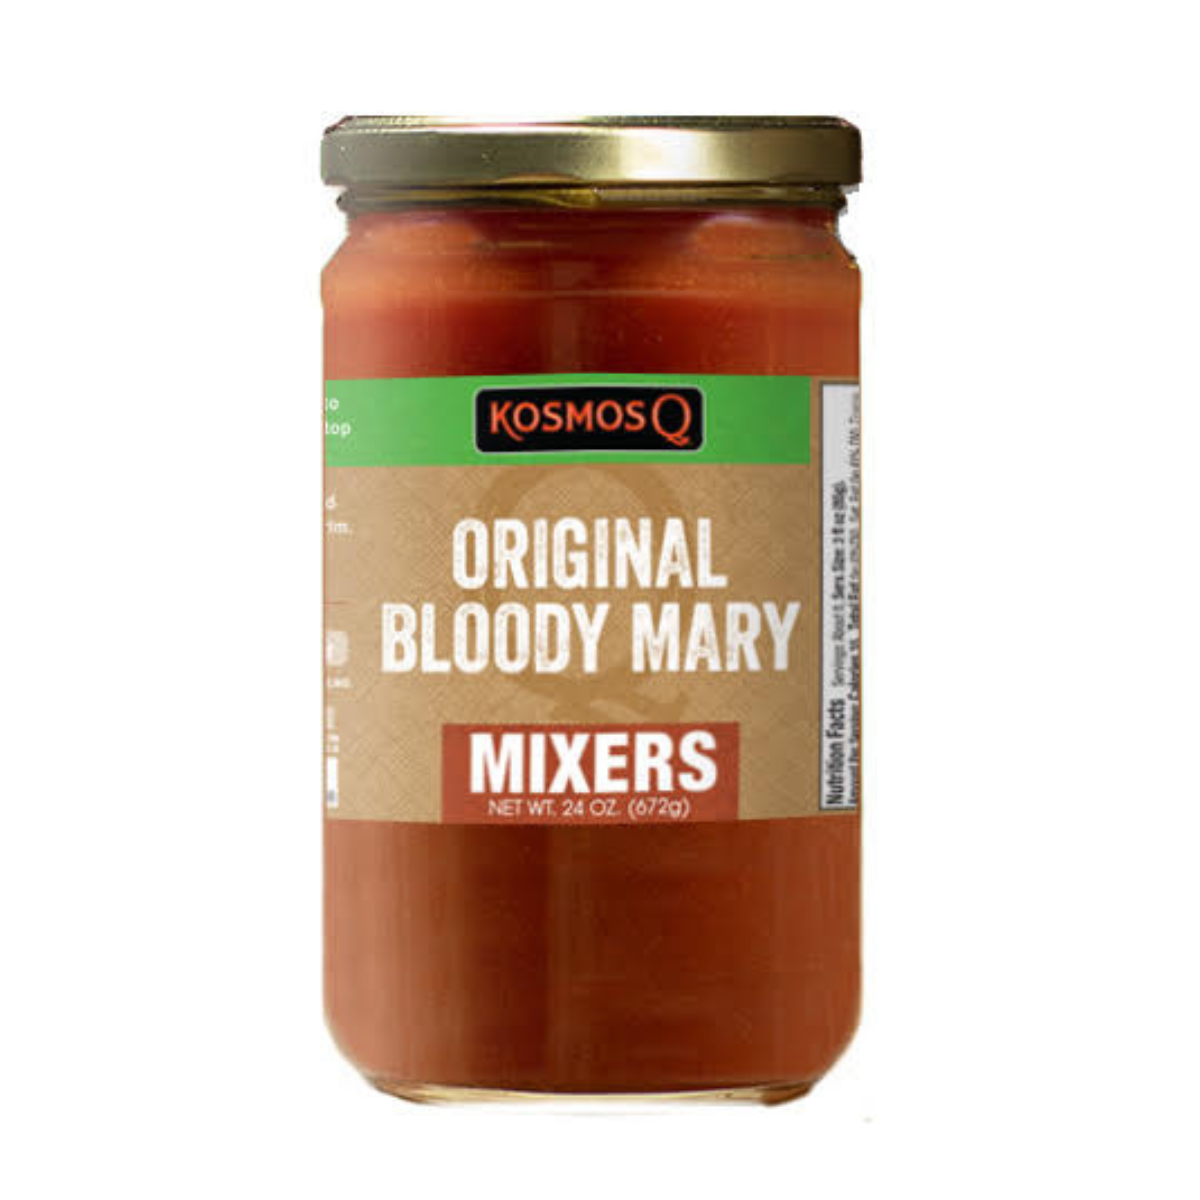 Kosmos Q BBQ Products & Supplies Original Bloody Mary Mix